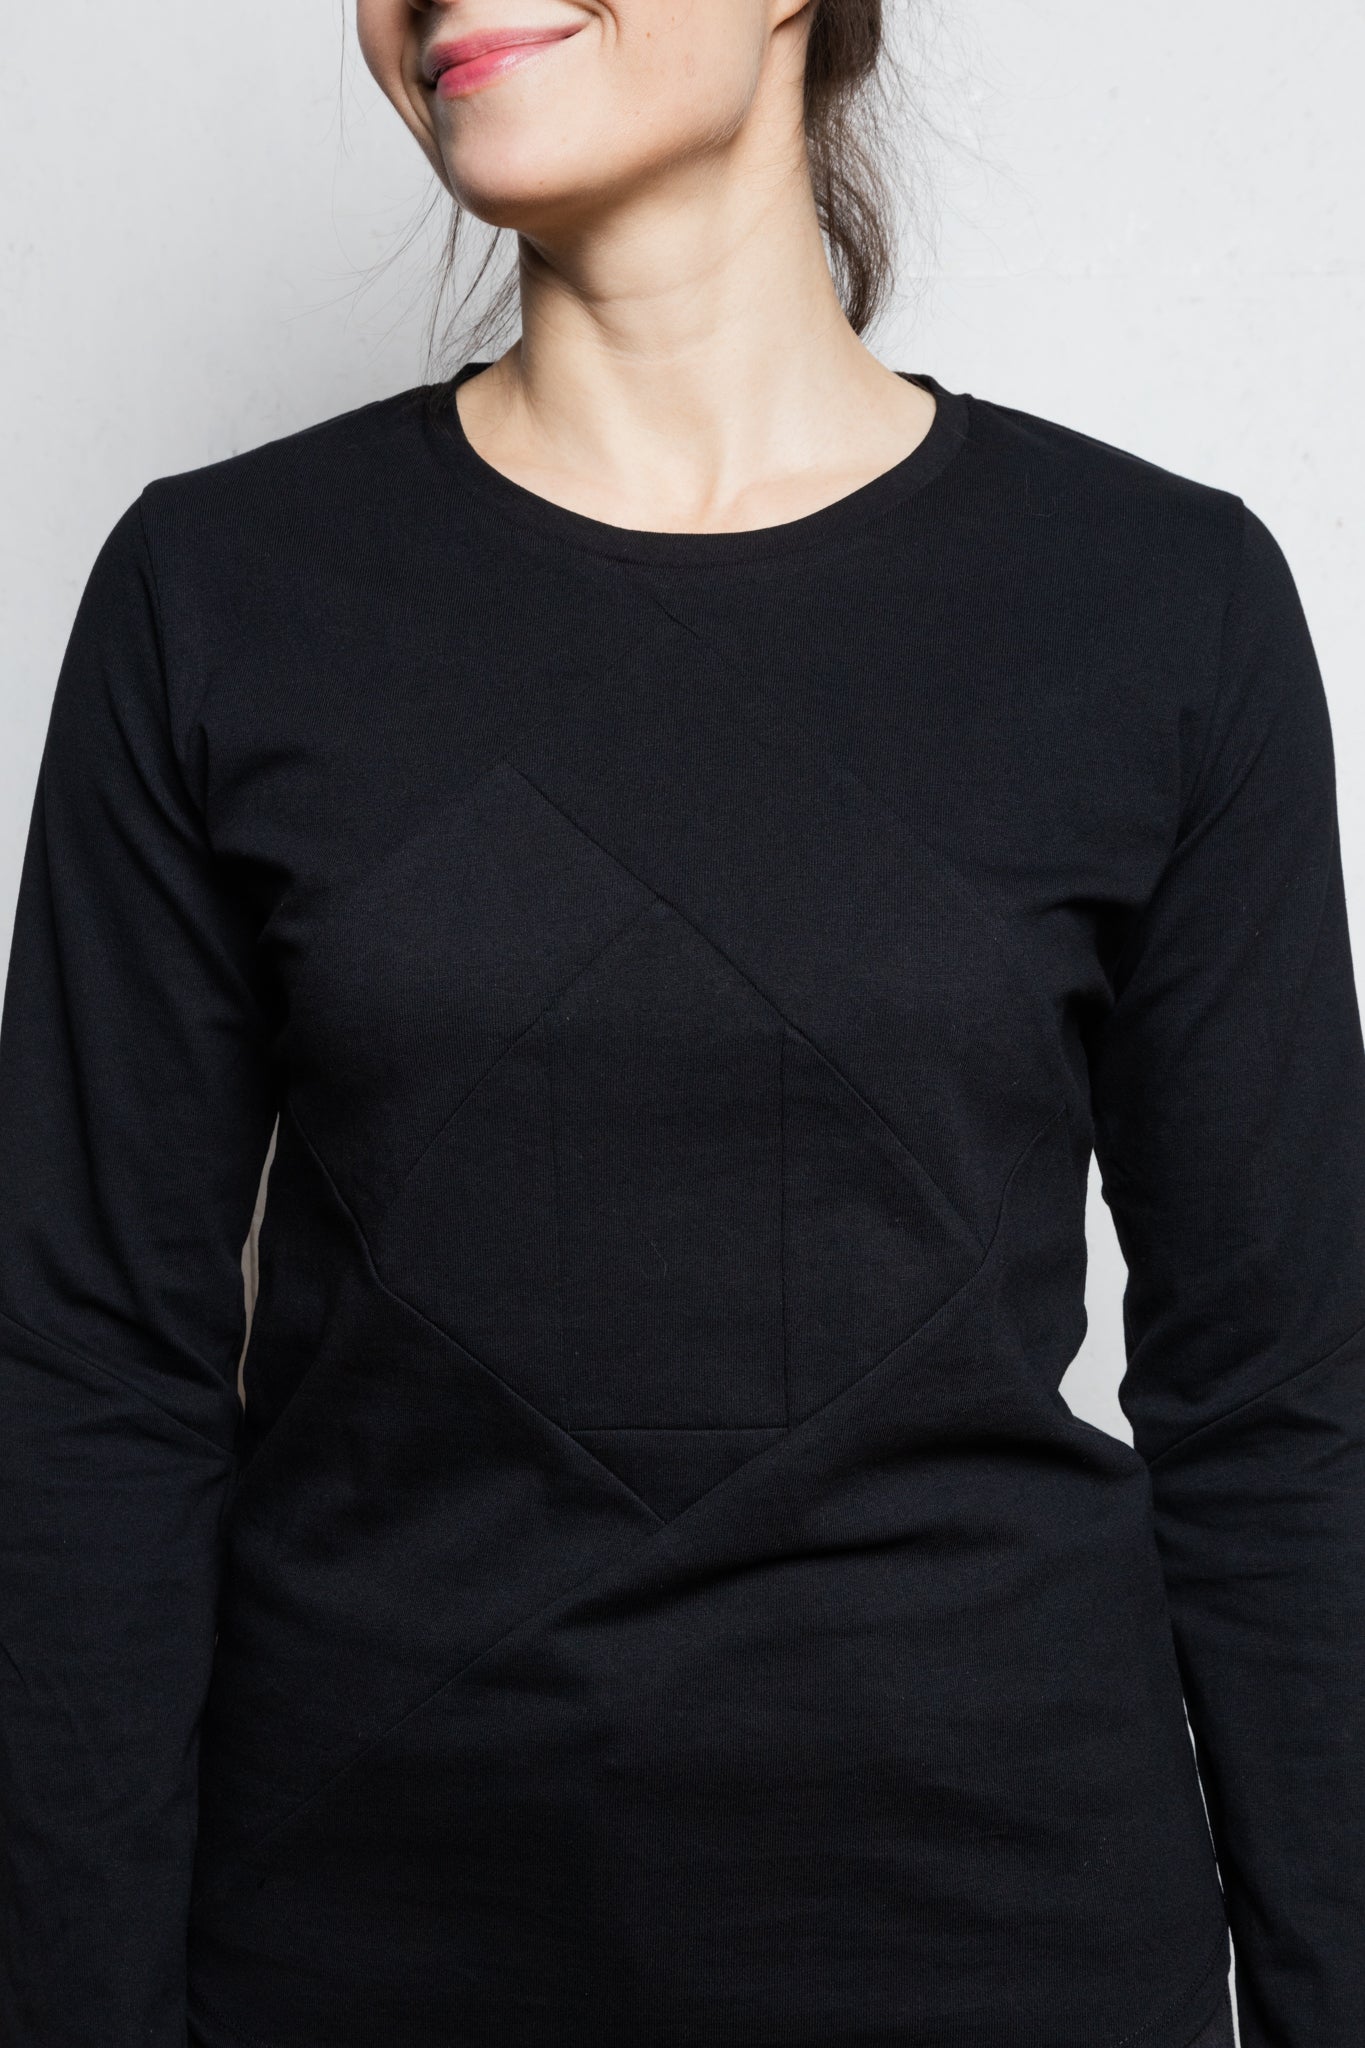 Up-shirt for women, long sleeves | Black, black - Reet Aus